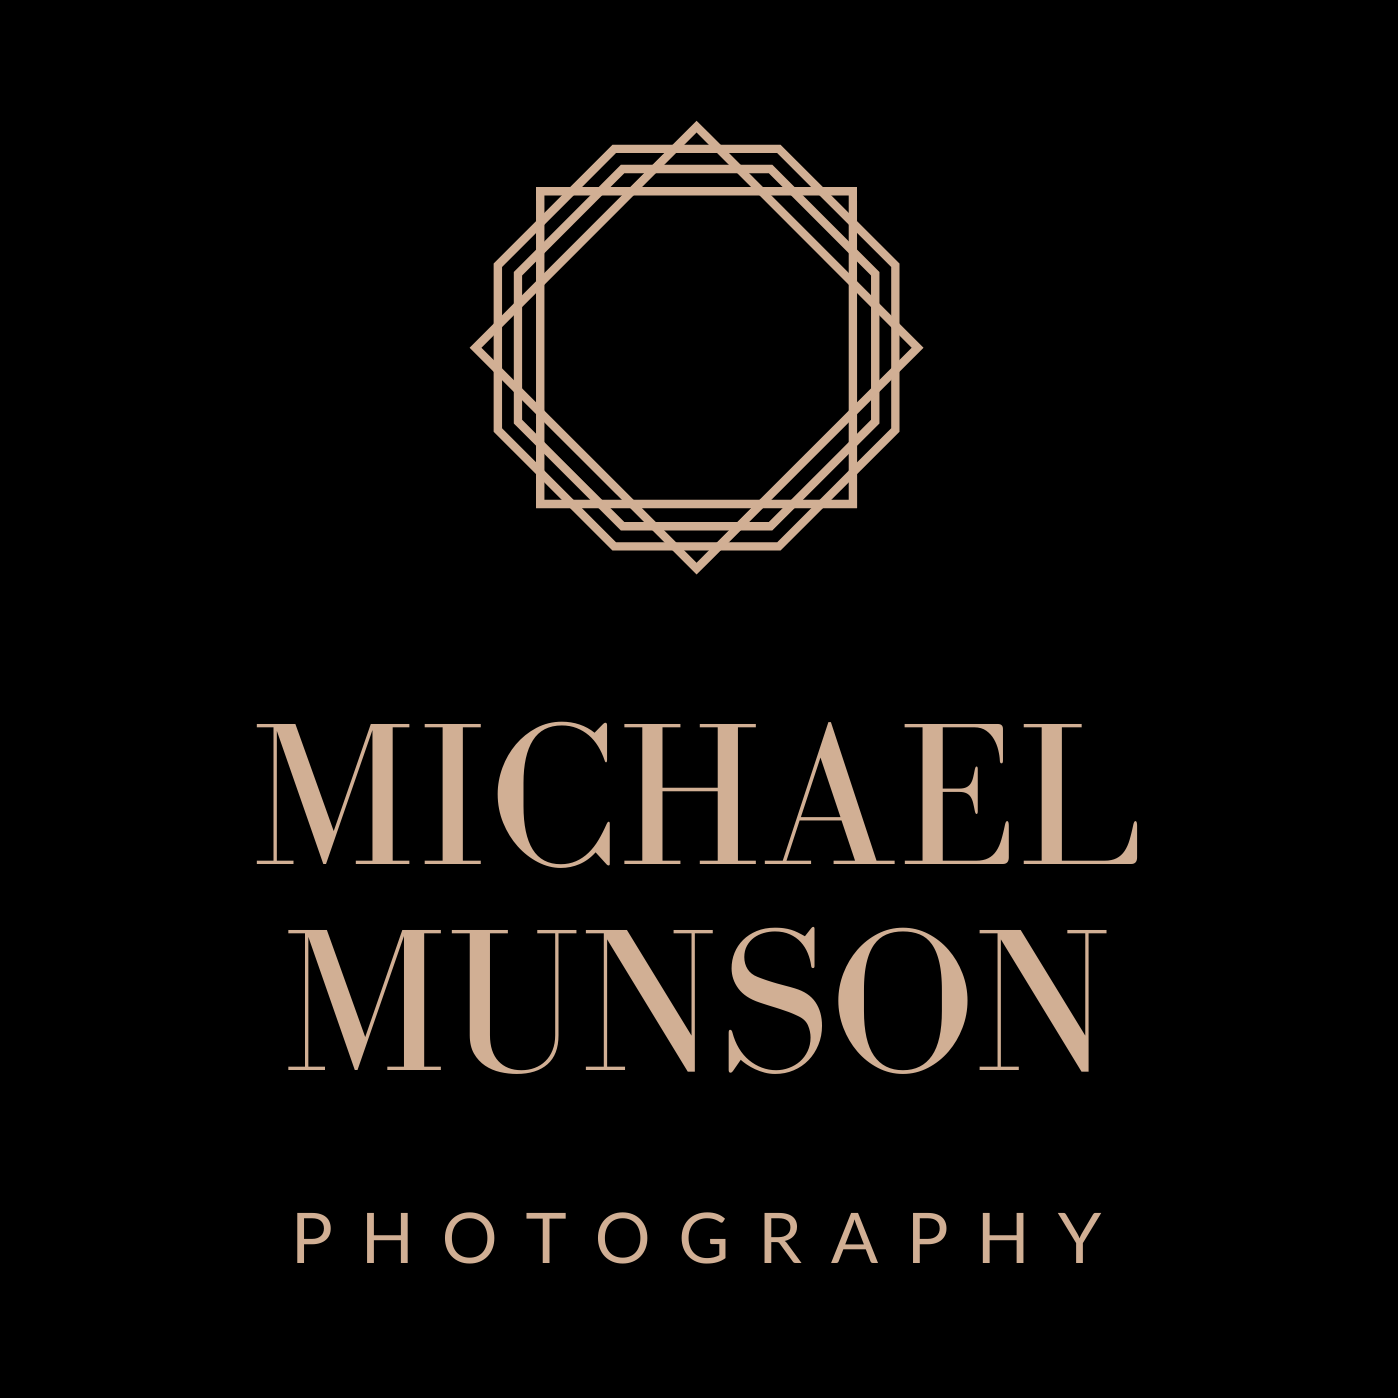 Michael Munson